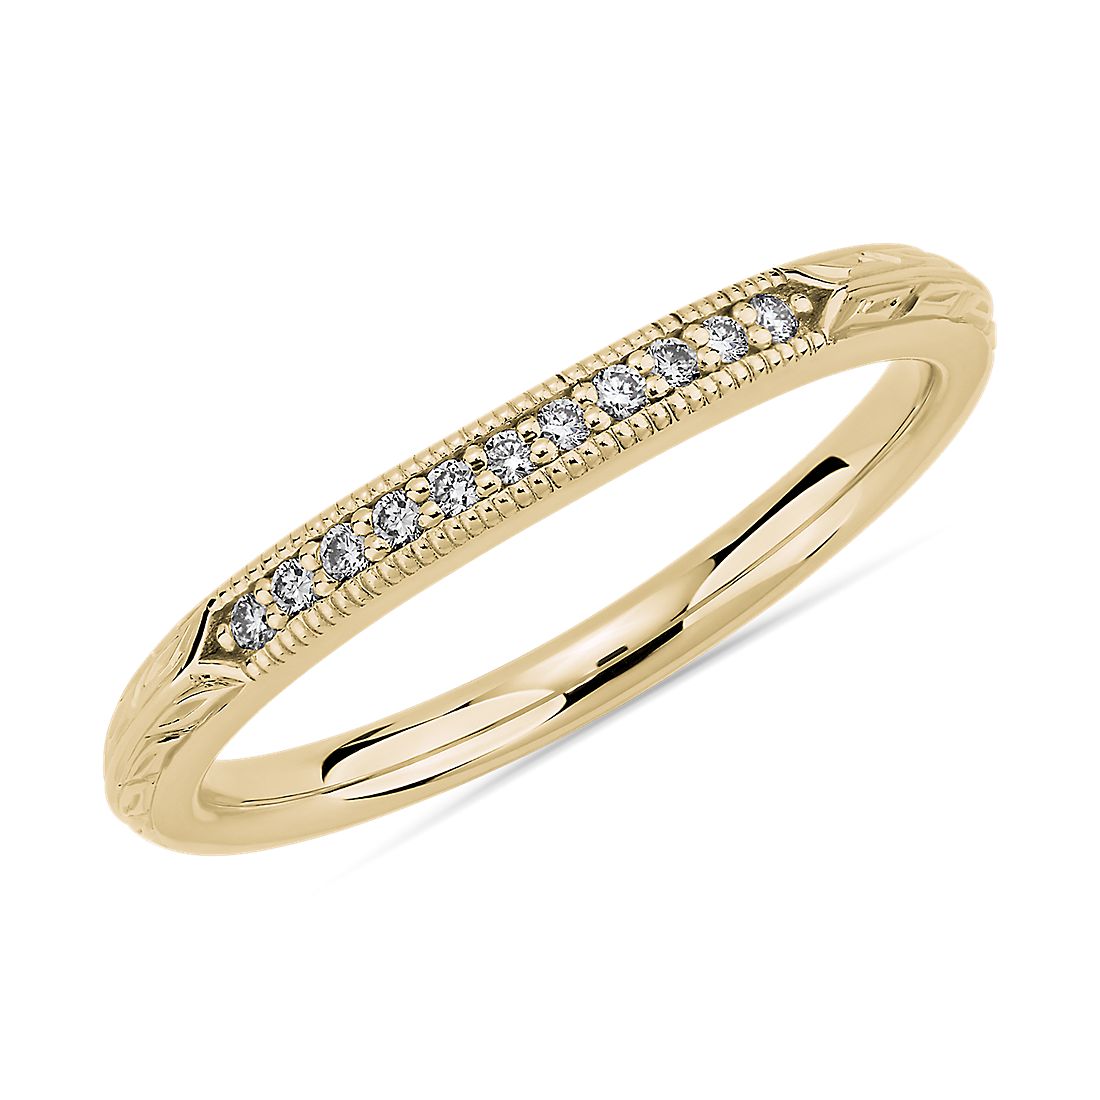 Vintage Hand Engraved Diamond Wedding Ring in 14k Yellow Gold